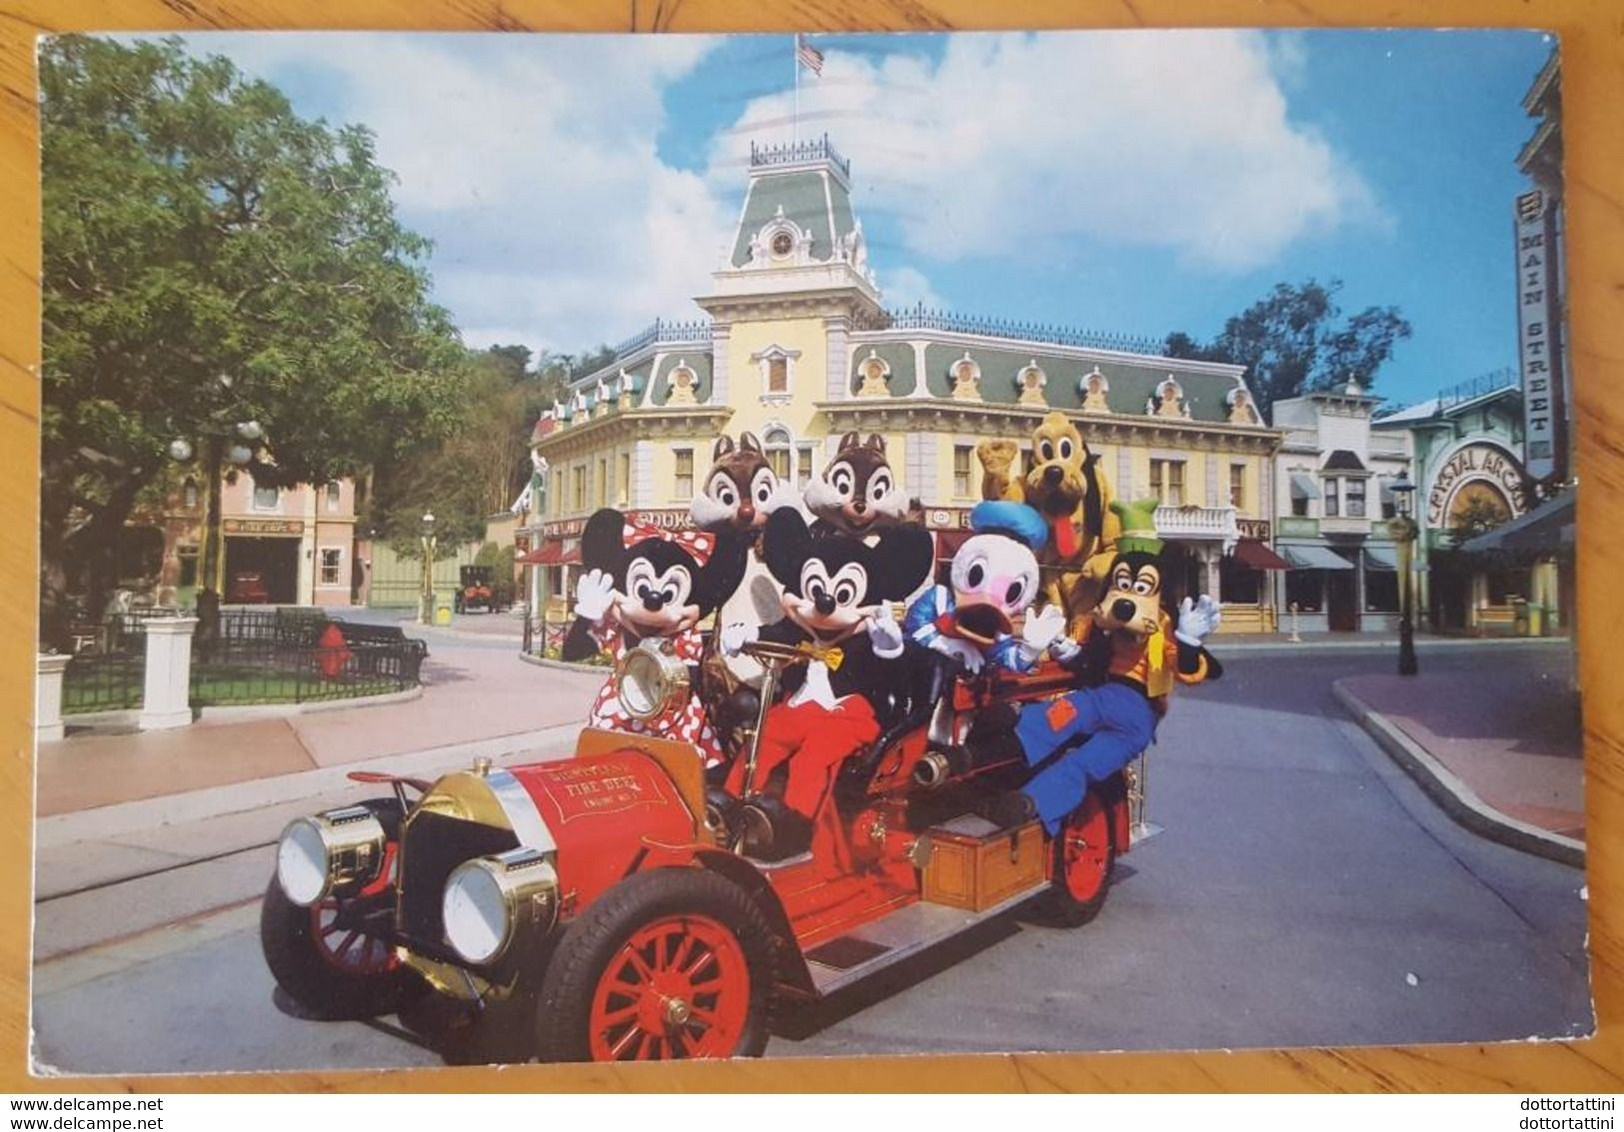 DISNEYLAND - MICKEY, MINNIE AND FRIENDS TAKE A SWING AROUND TOWN SQUARE IN THE DISNEYLAND FIRE DEPT - Disneyland